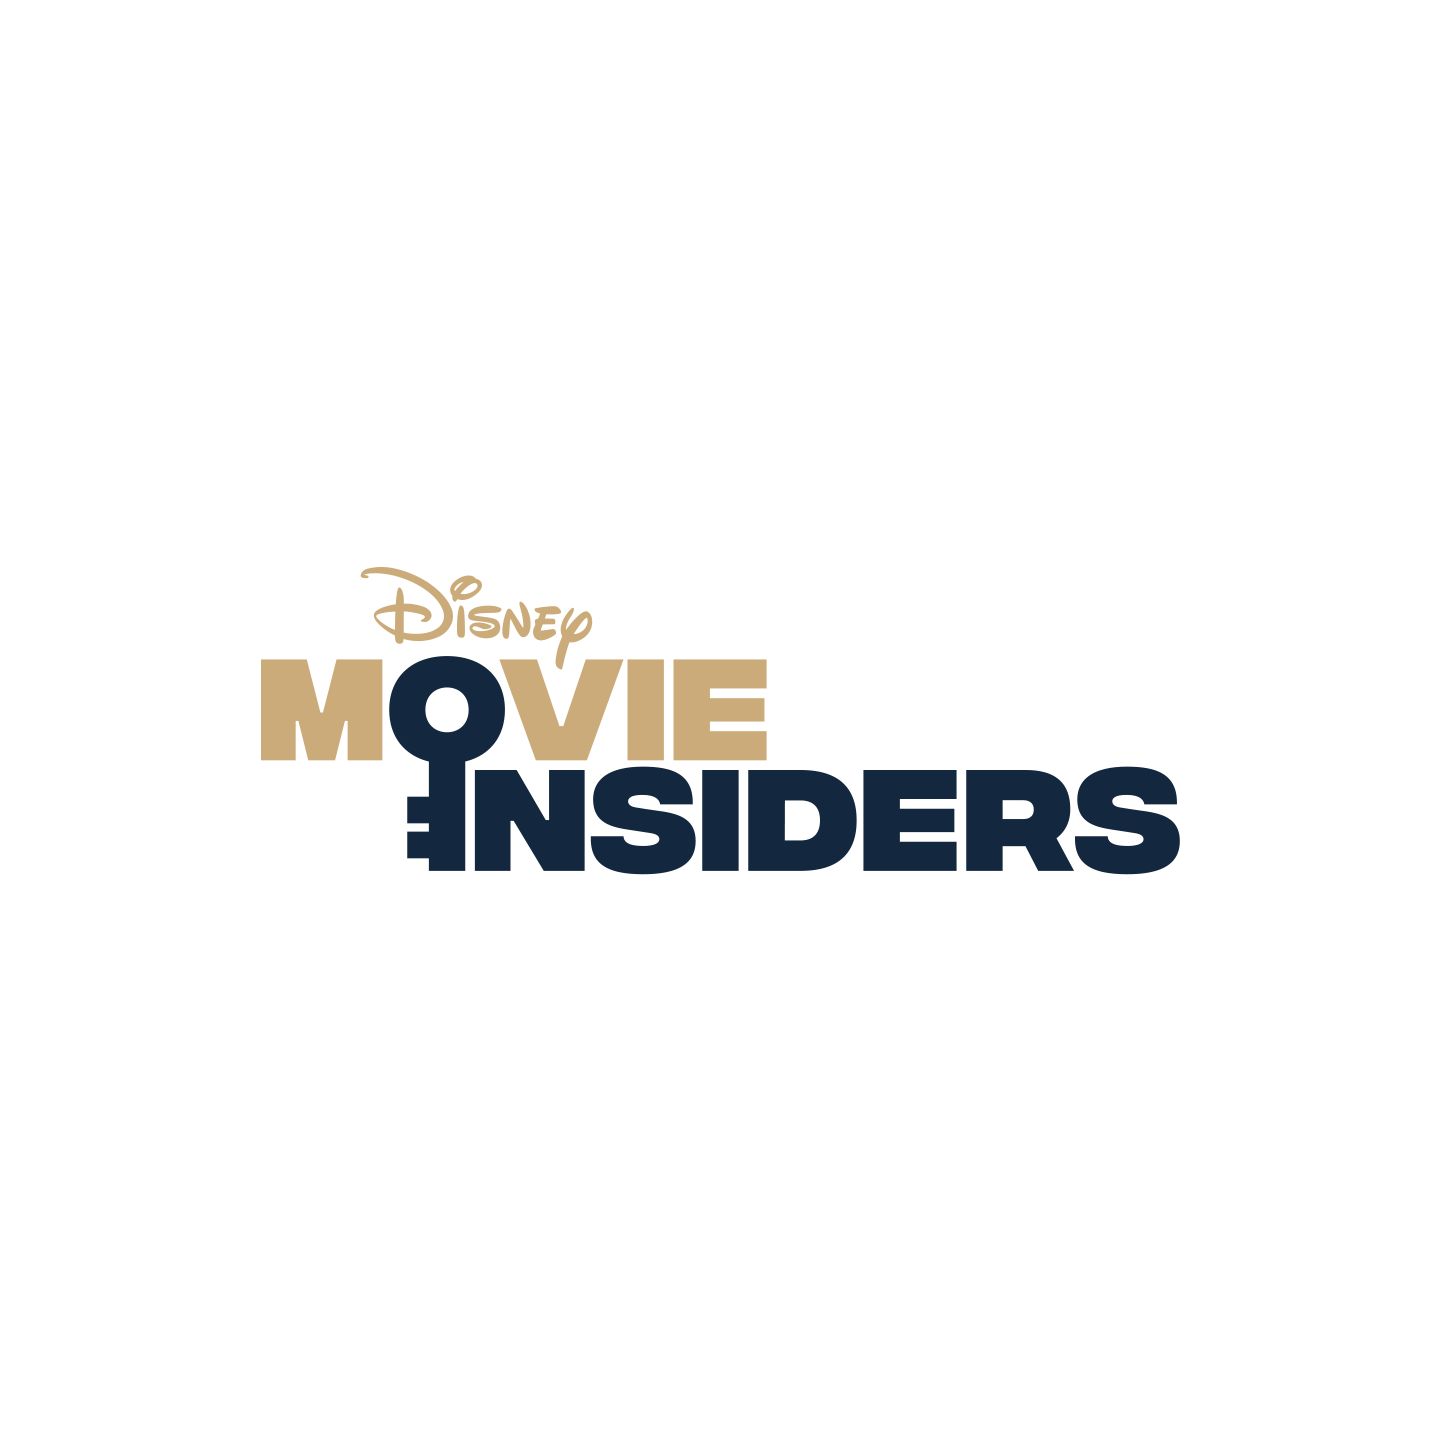 Disney Movie Insiders Presents THE INSIDER 5 FEATURING - SKETCHBOOK - GABBY CAPILI & SAMANTHA VILFORT - LISTEN NOW